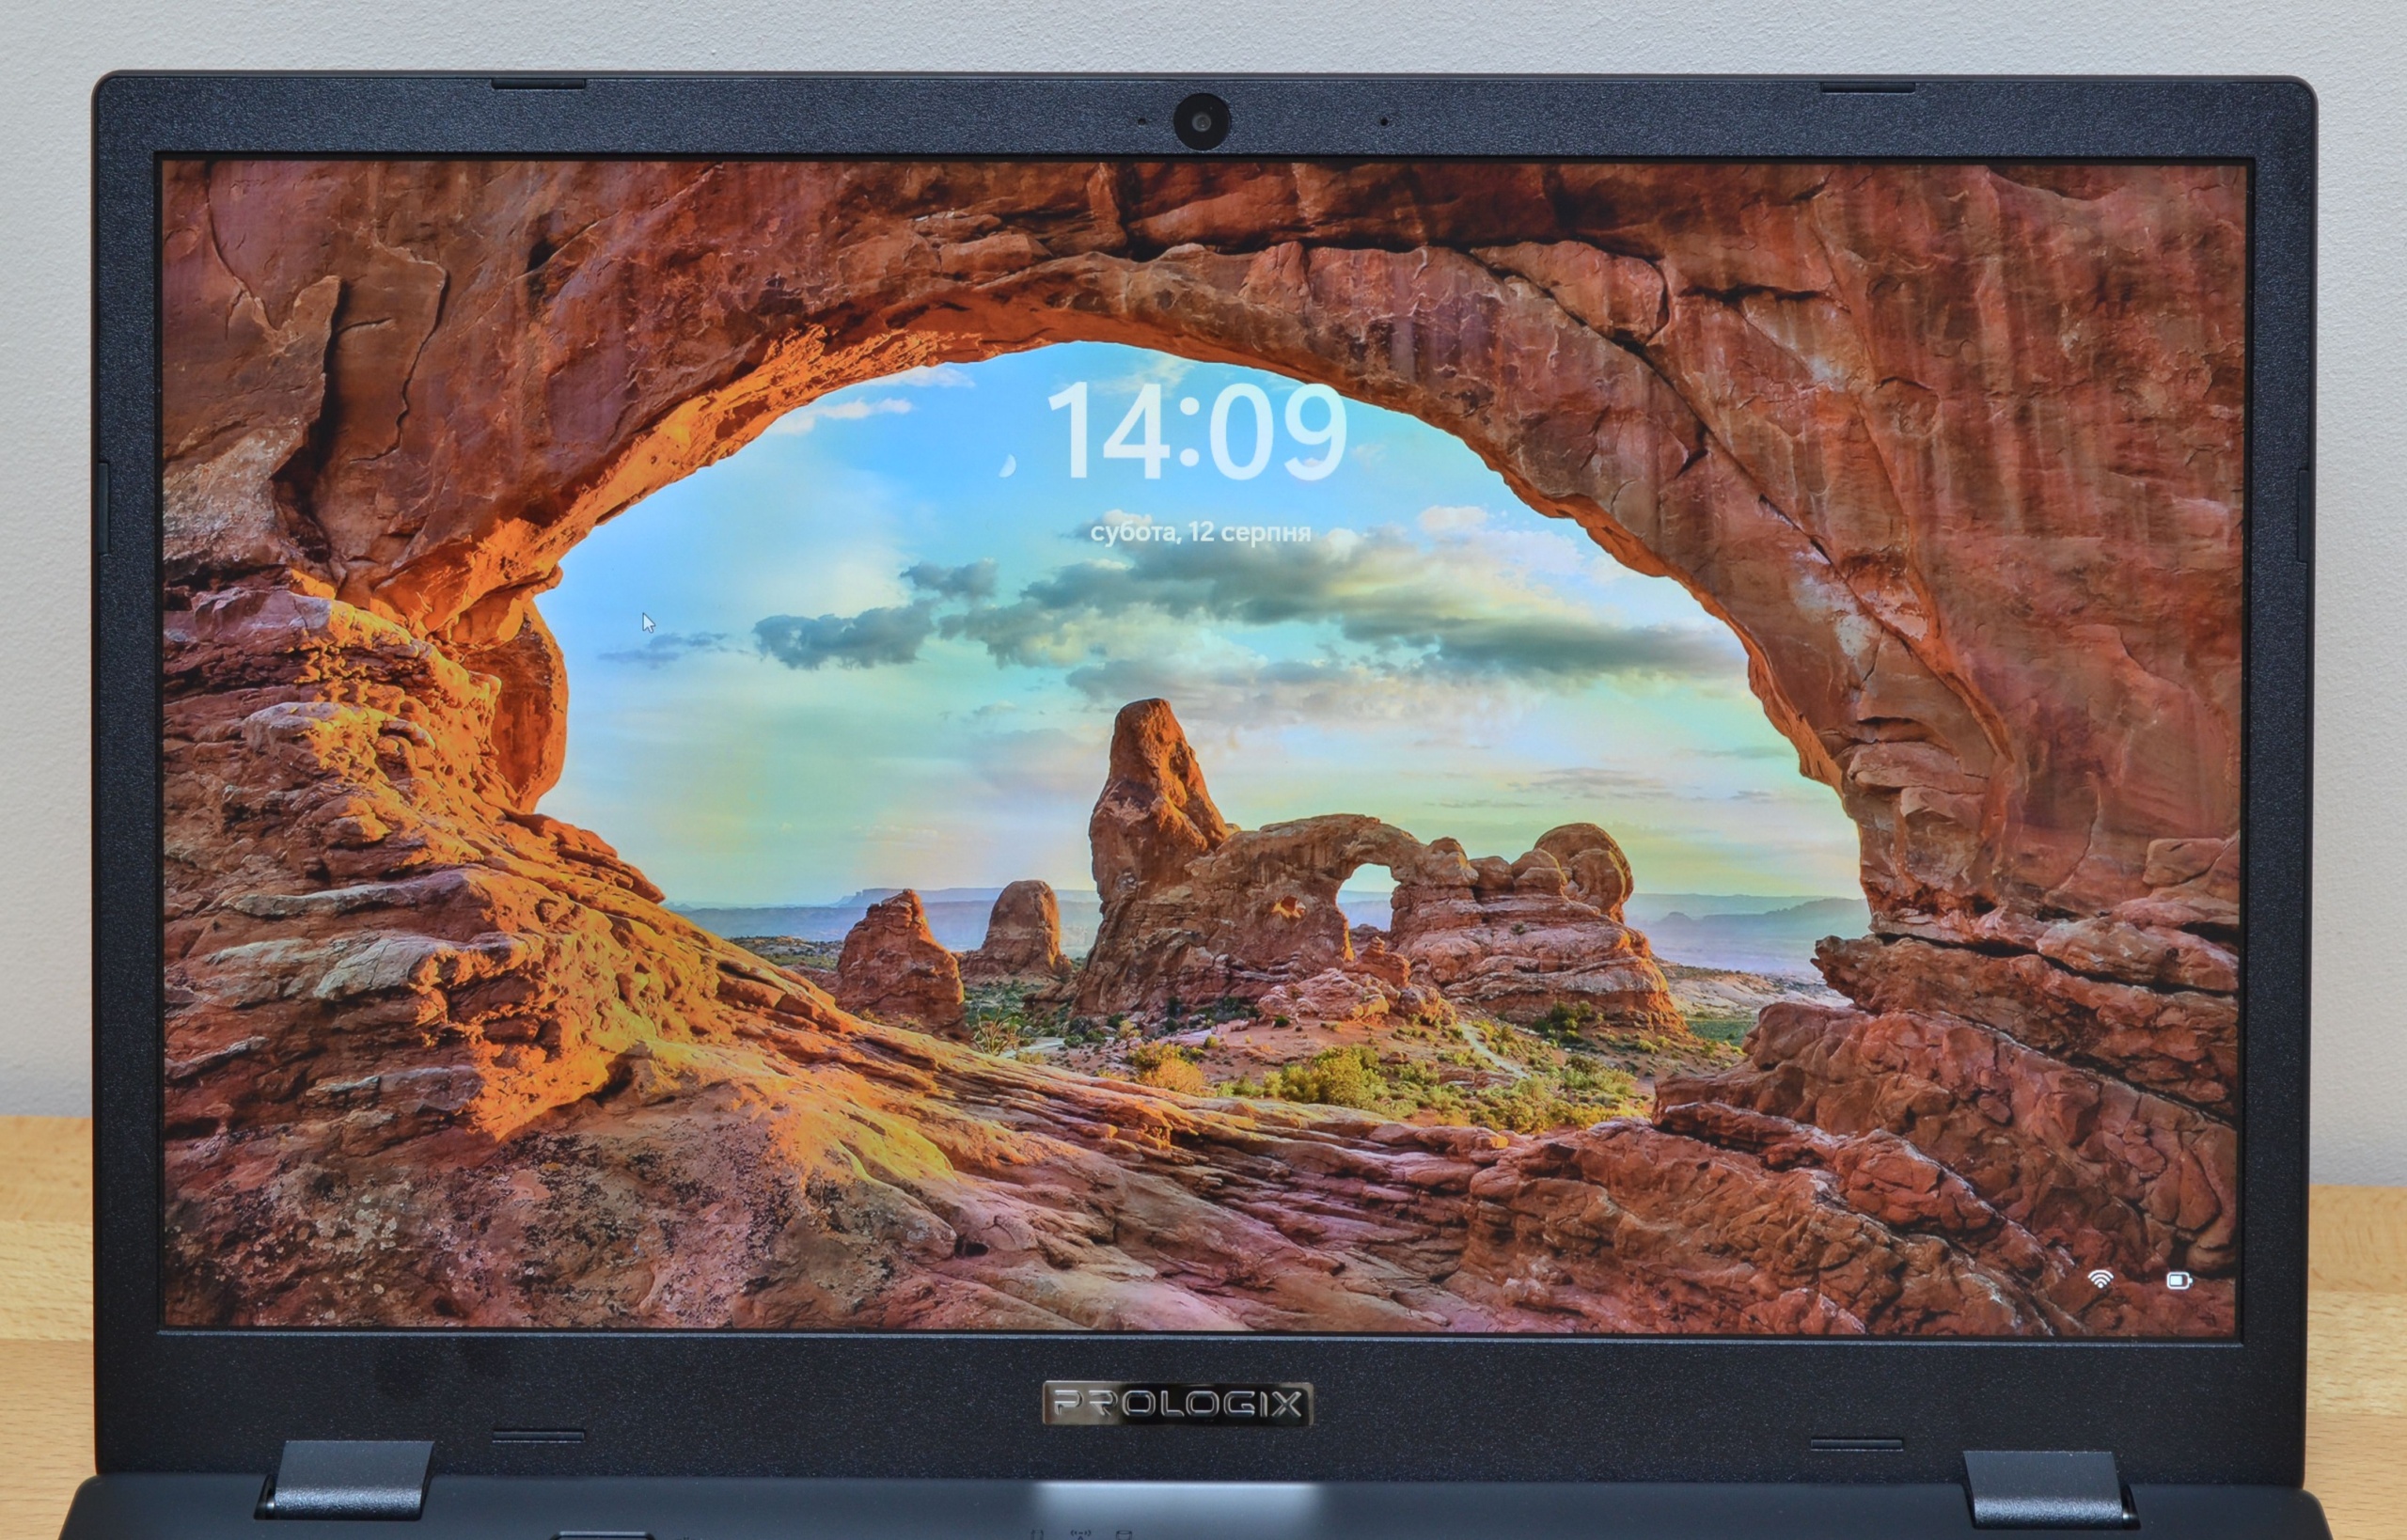 Ноутбук Prologix M15-722: экран 15,6 дюйма, процессор Intel Core i5-1235U и цена 25 999 гривен